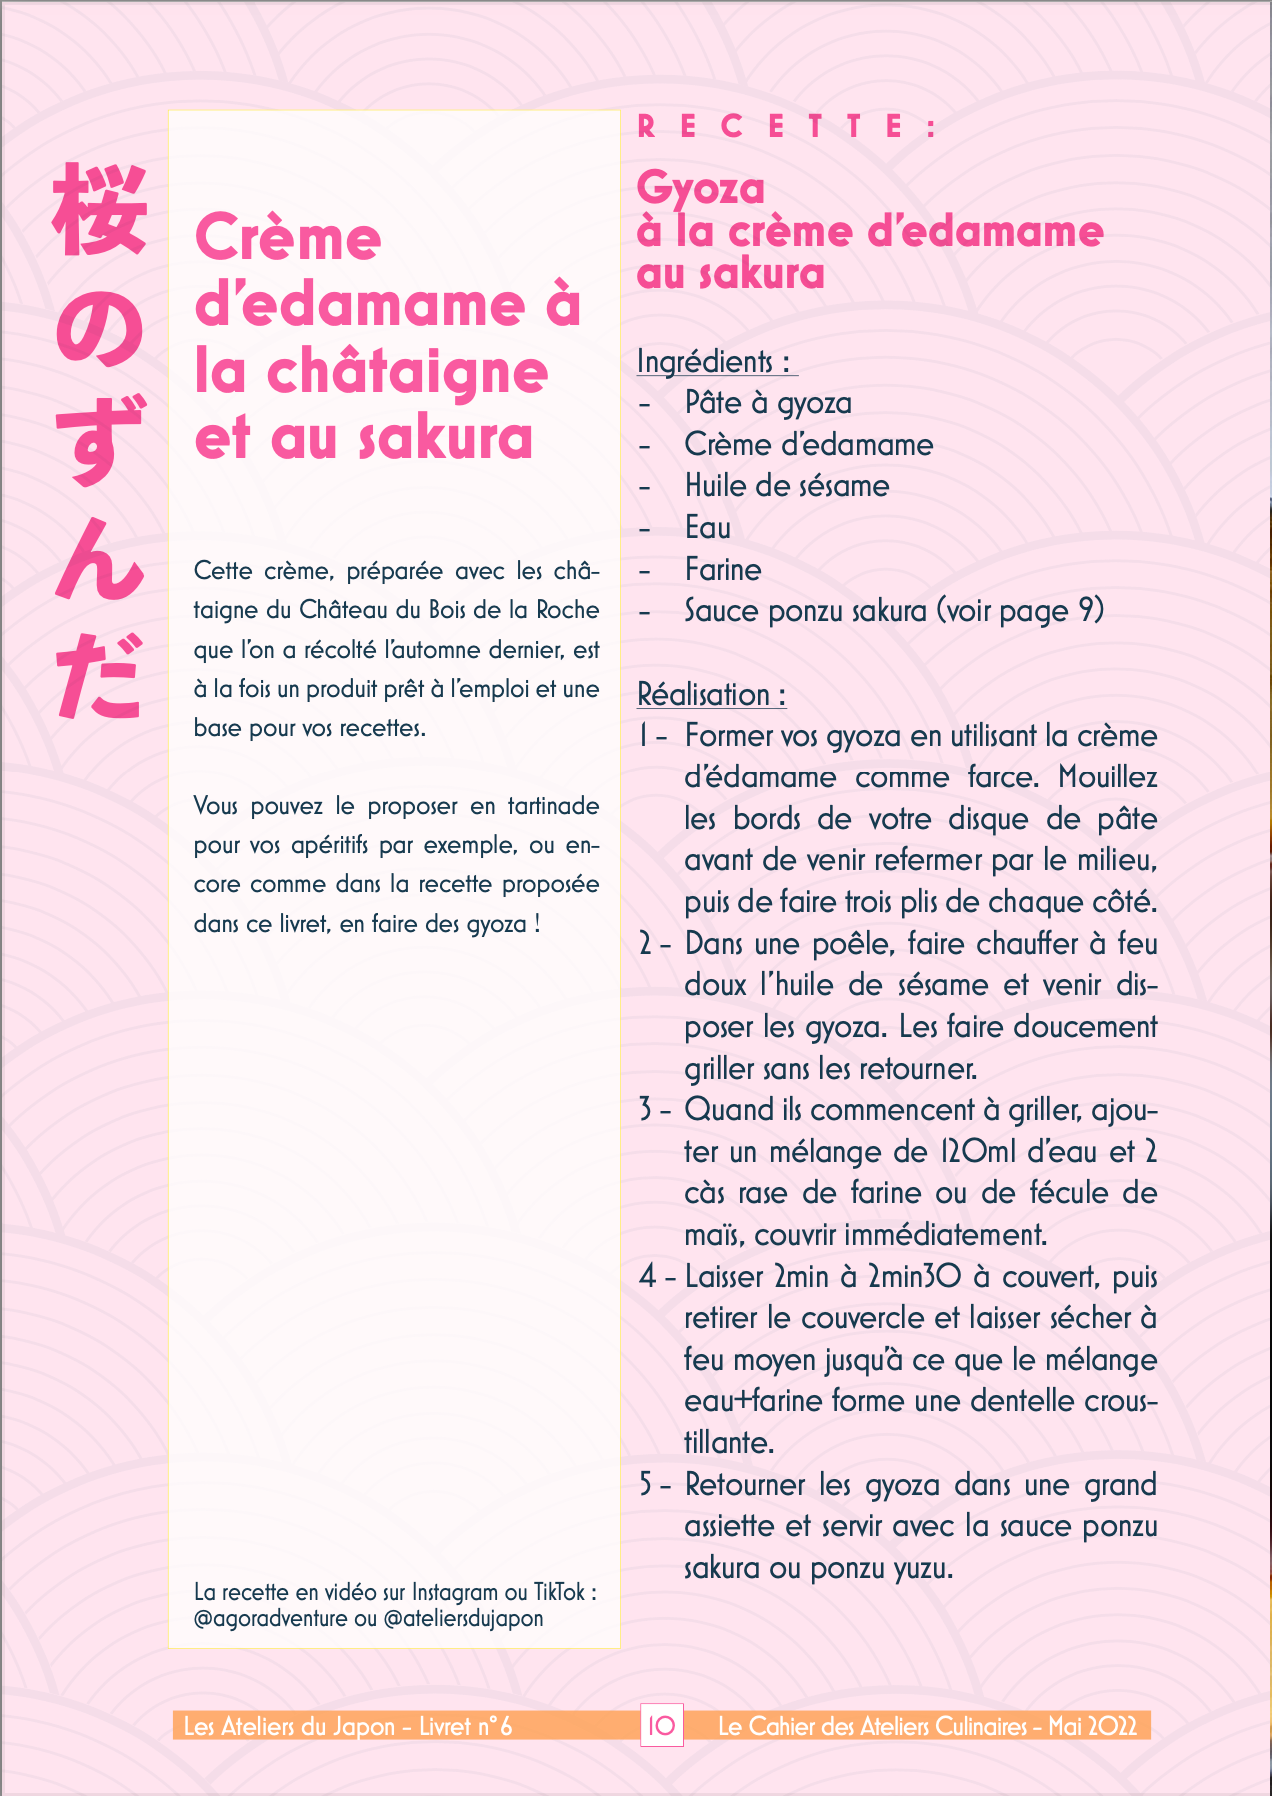 Recette Gyoza avec Sauce Ponzu sakura des Ateliers du Japonsauce Ponzu Sakura - Less Ateliers du Japon